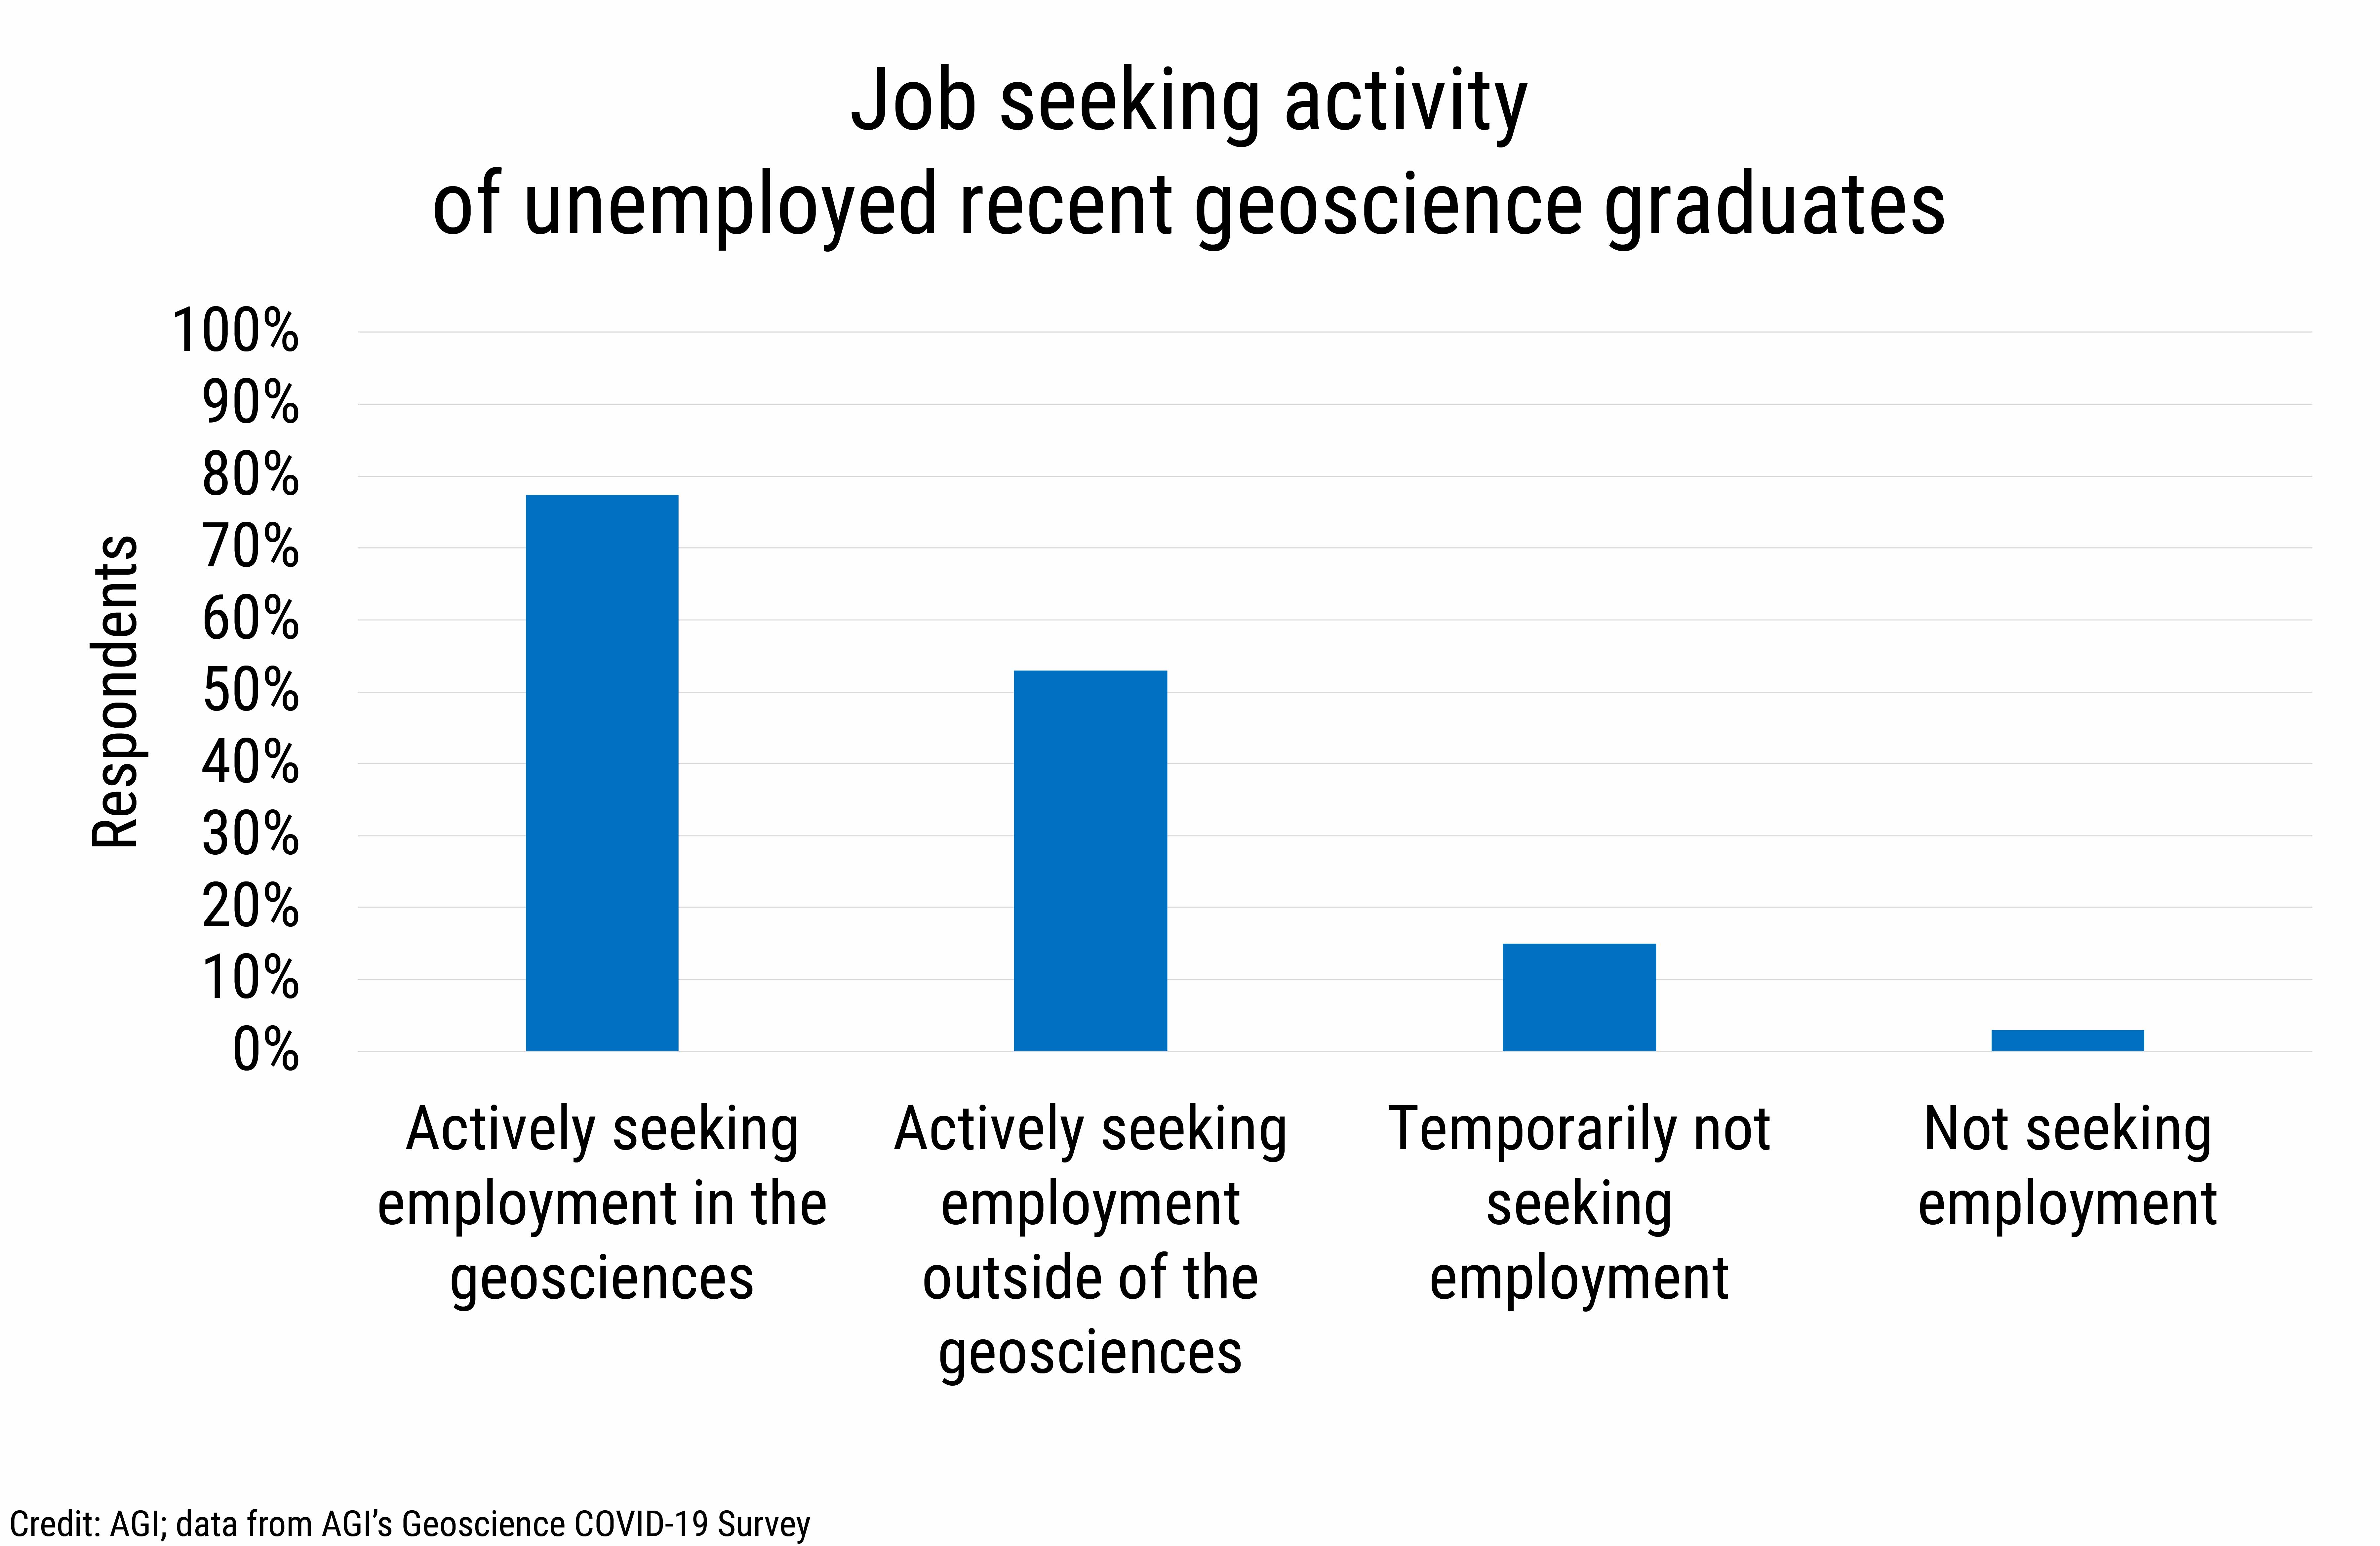 DB_2020-019 chart 05: Job seeking activity of unemployed recent geoscience graduates (credit: AGI; data from AGI’s Geoscience COVID-19 Survey)